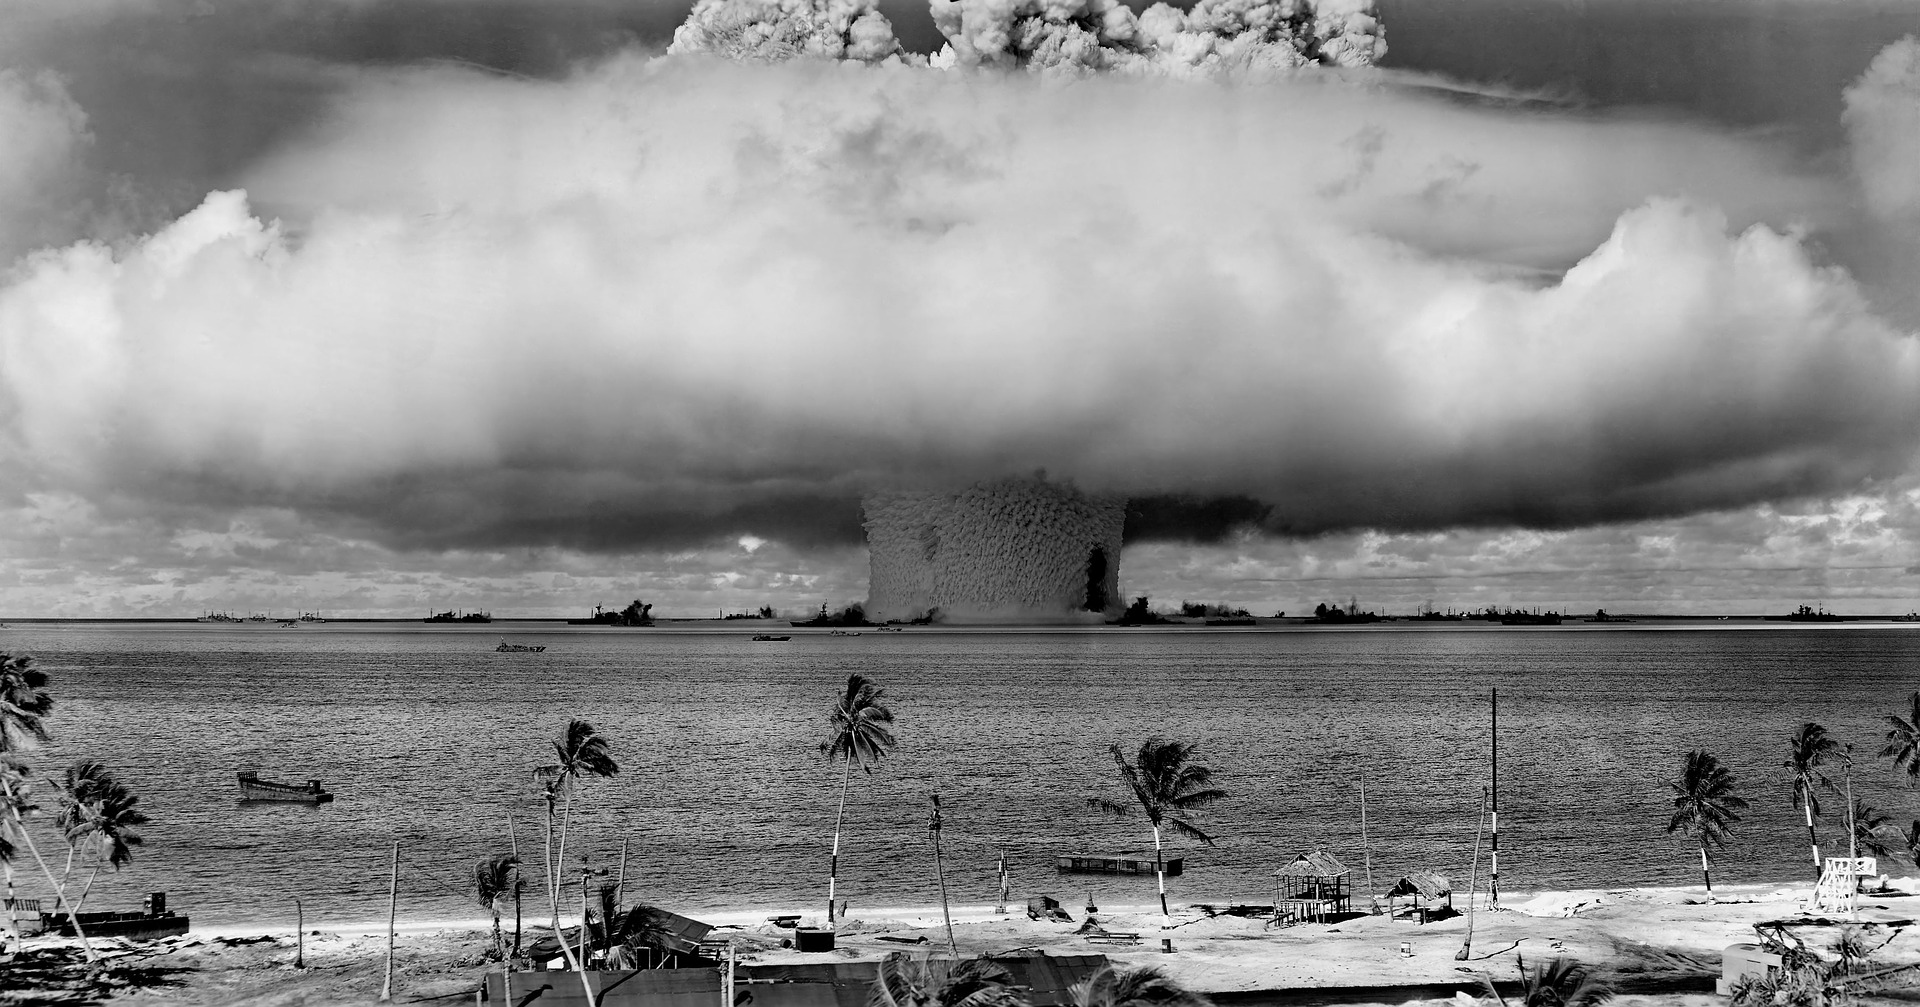 Mushroom cloud due to an atomic bomb.